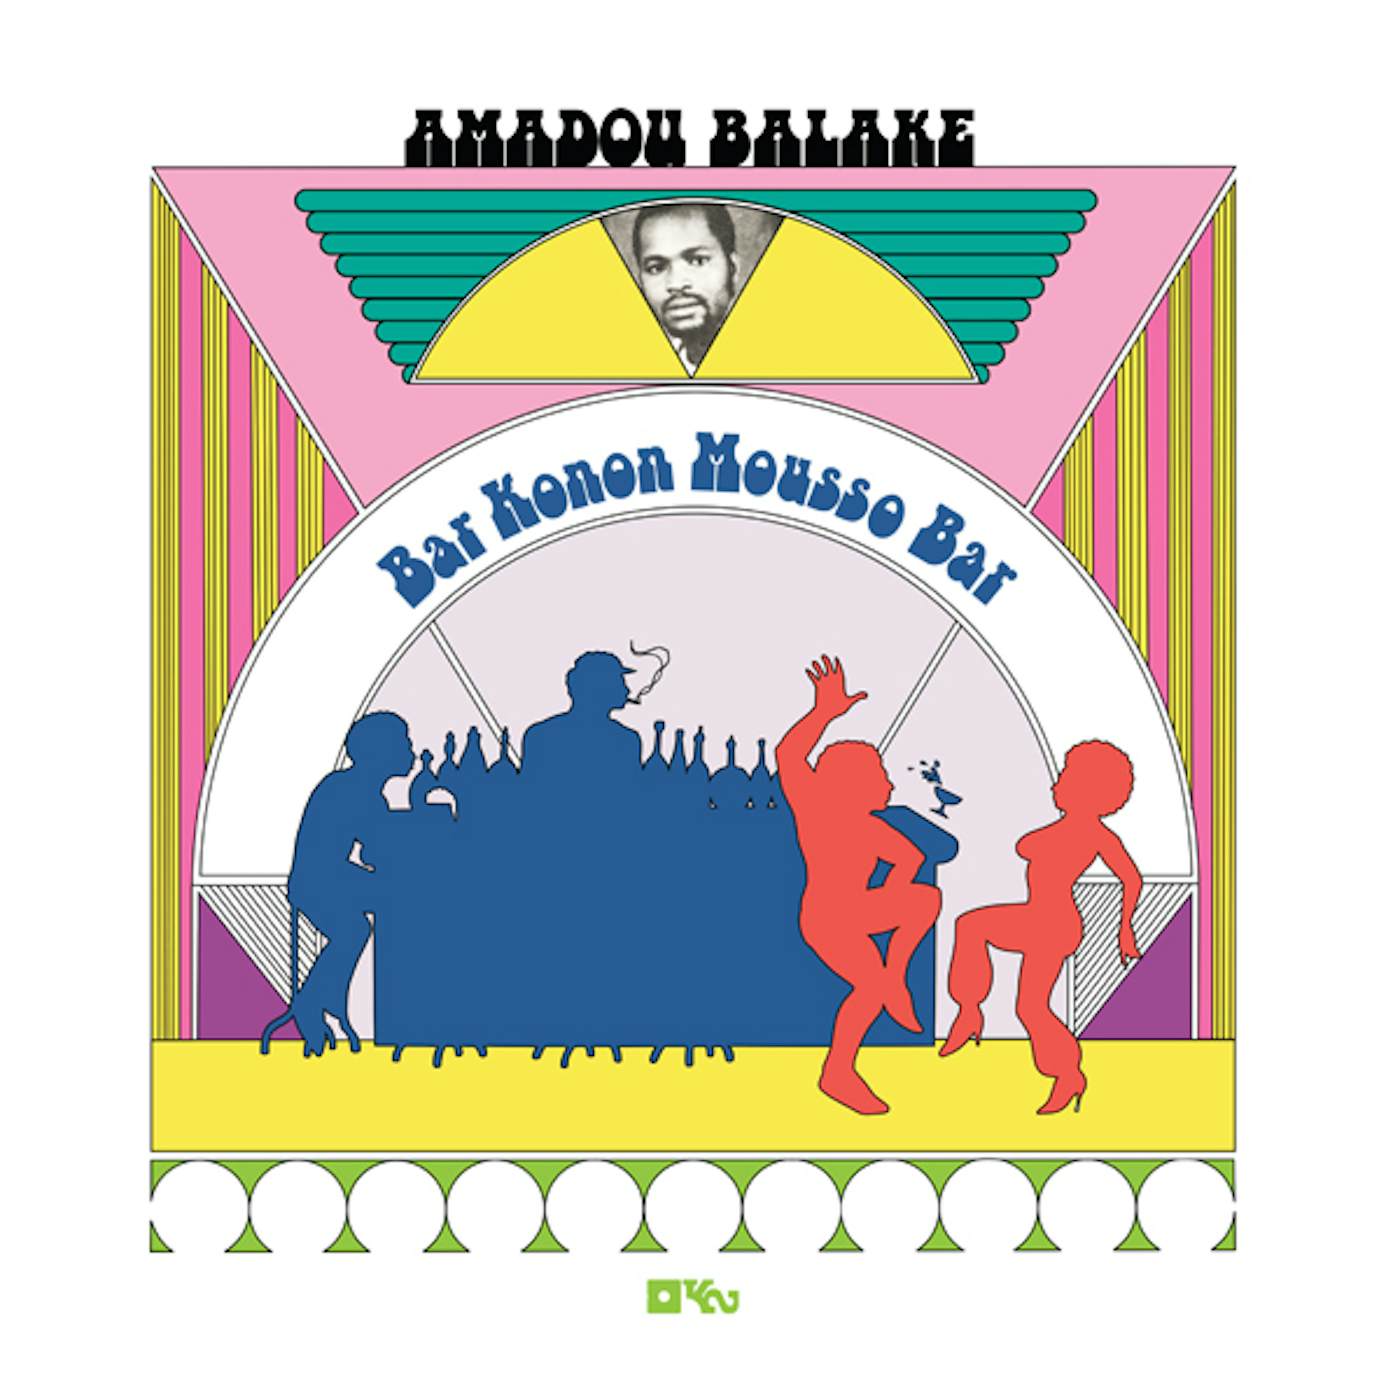 Amadou Ballake Bar Konon Mousso Bar Vinyl Record